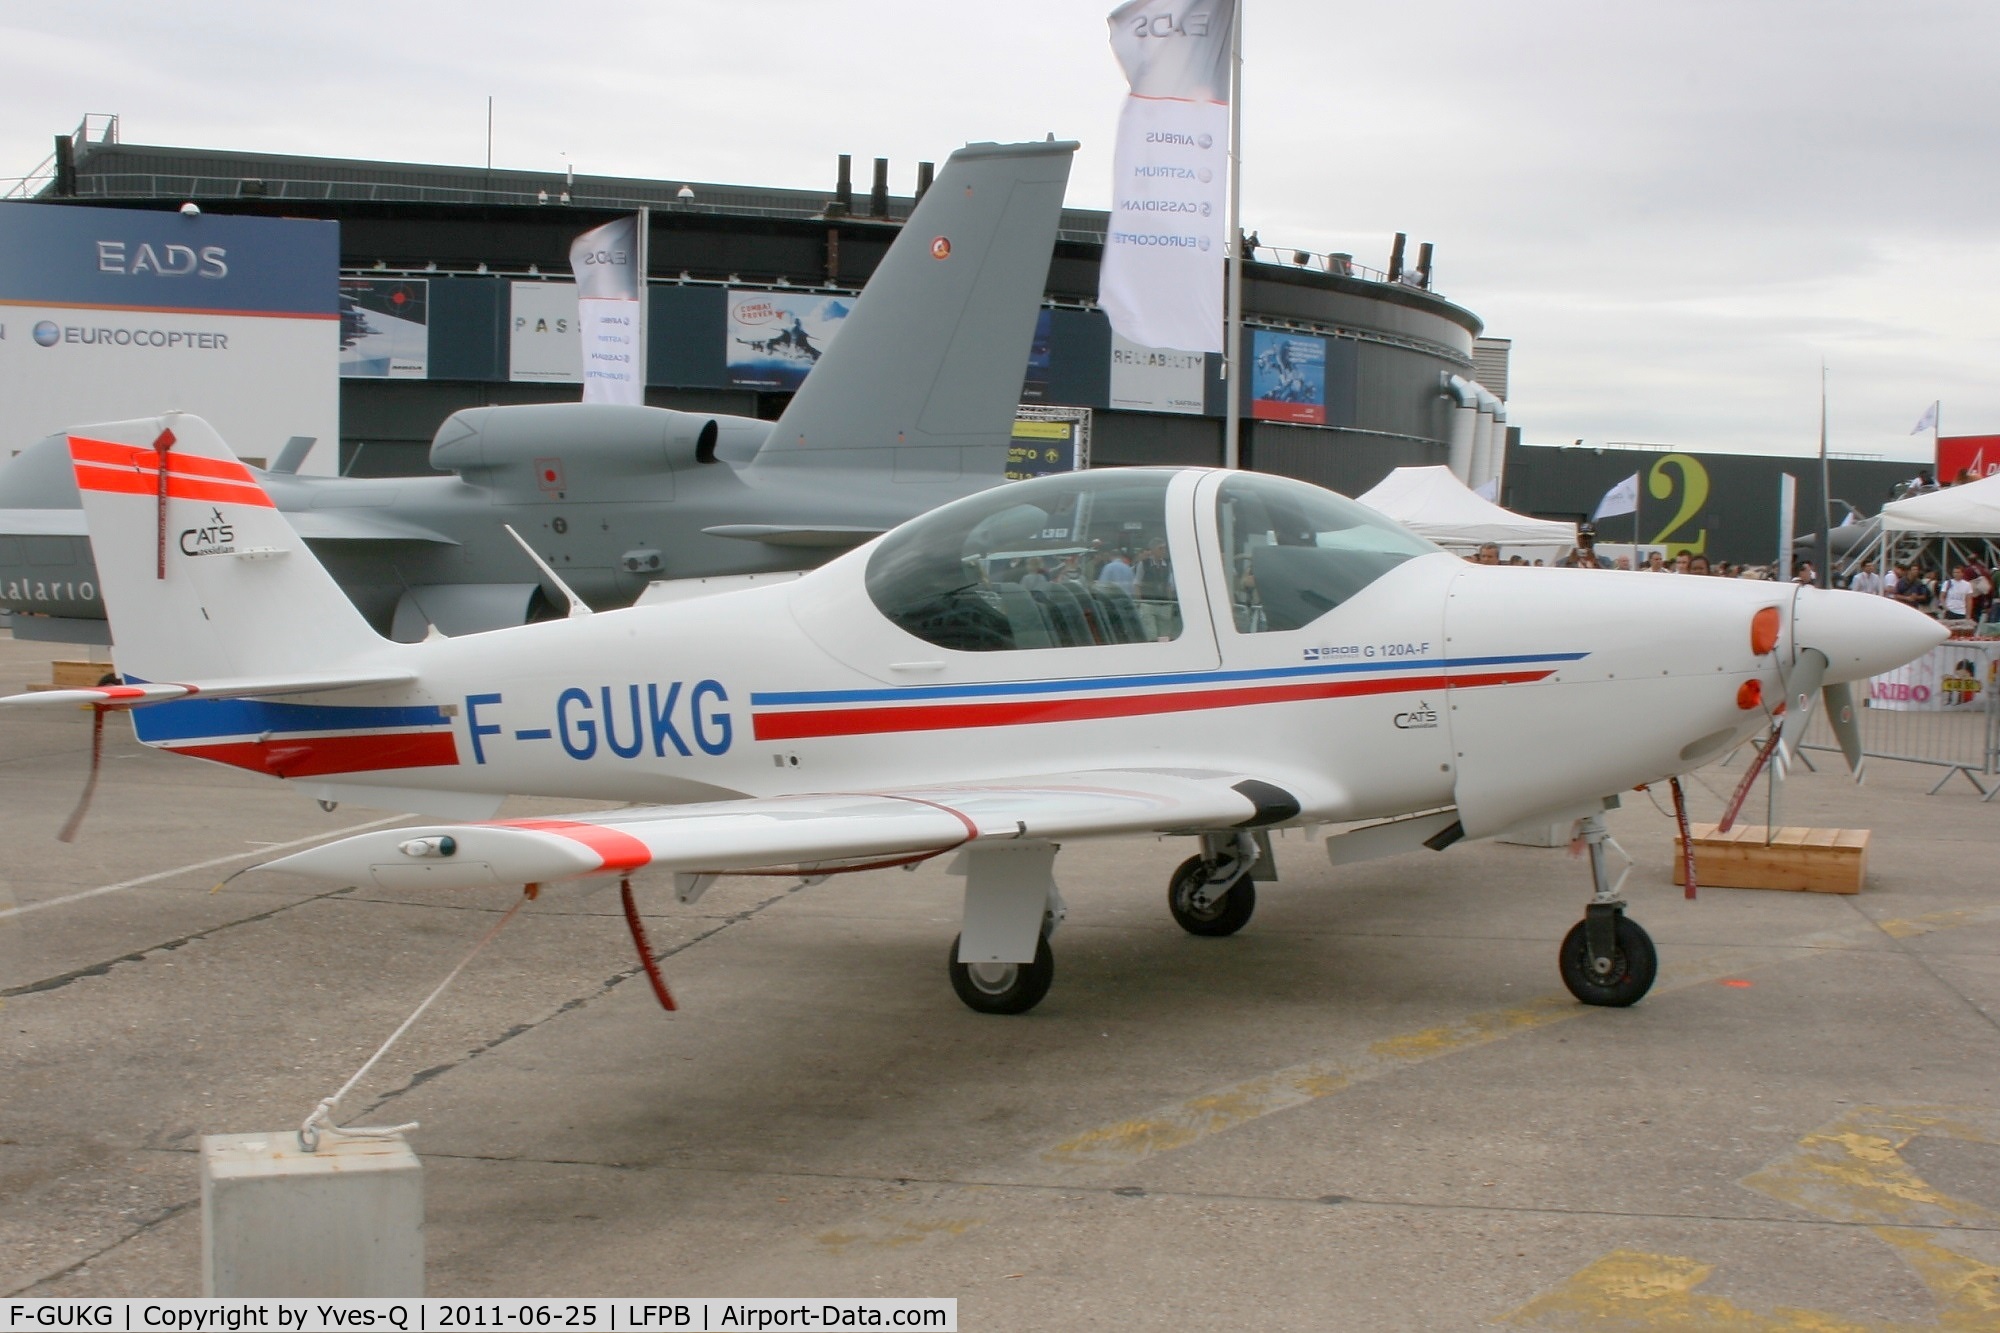 F-GUKG, Grob G-120A-F C/N 85041, F-GUKG - Grob G-120 A-F, Static display, Paris Le Bourget (LFPB-LBG) Air Show in june 2011